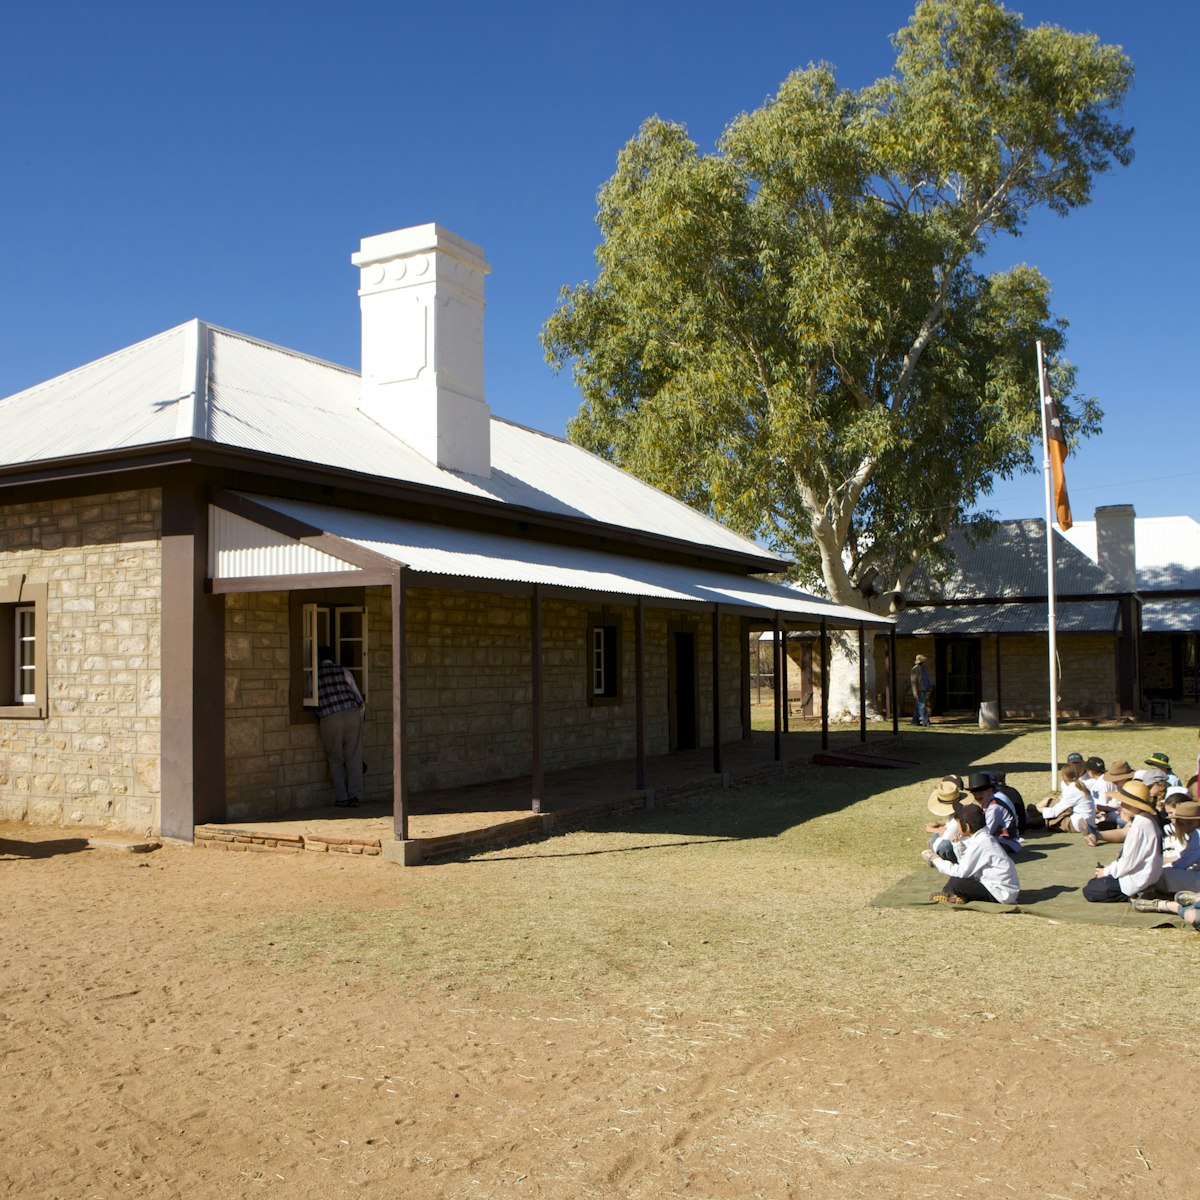 Alice Springs Telegraph Station Historical Reserve.